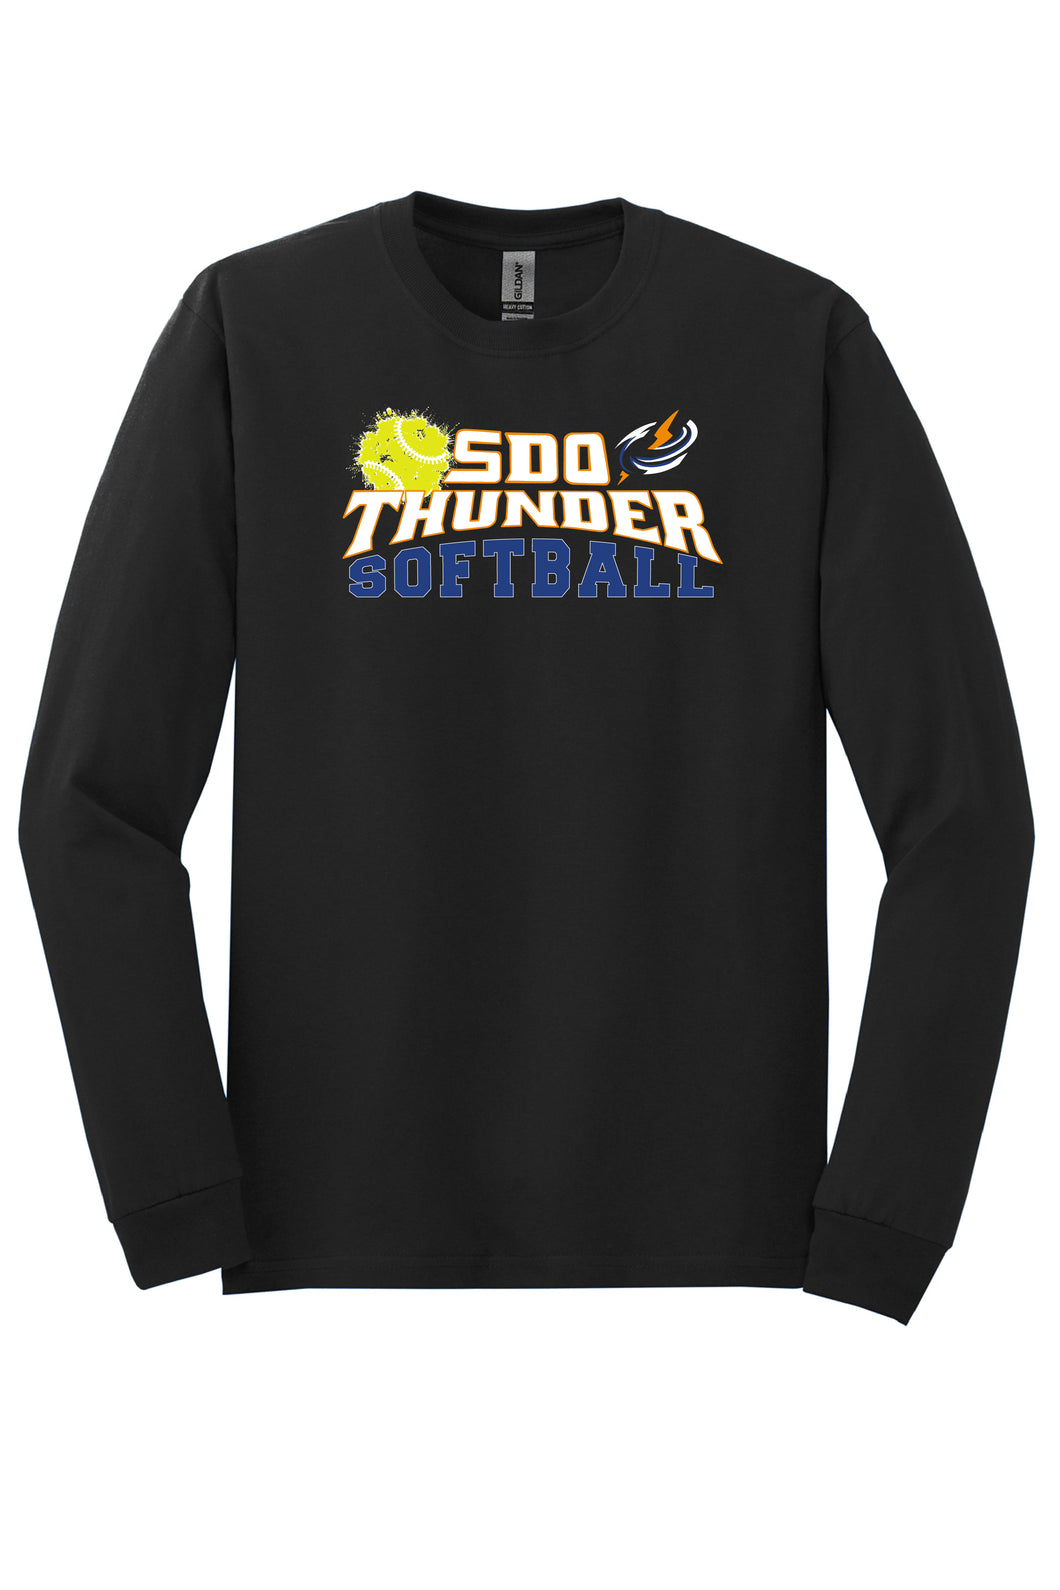 SDO Softball Long Sleeve